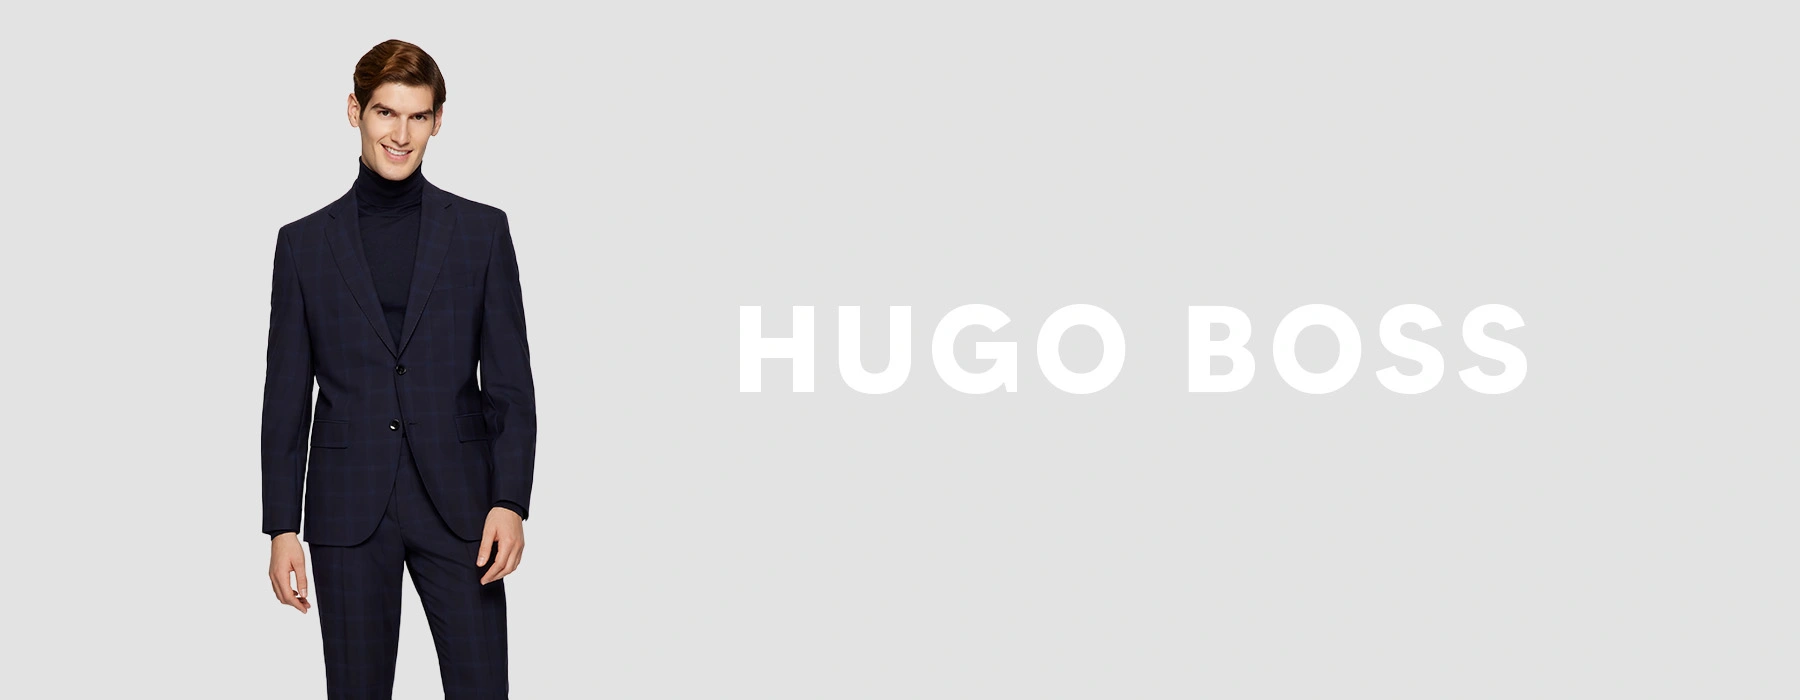 Vooruit dinosaurus Ontslag Hugo Boss Kostuums | Online Kopen | Bos Men Shop